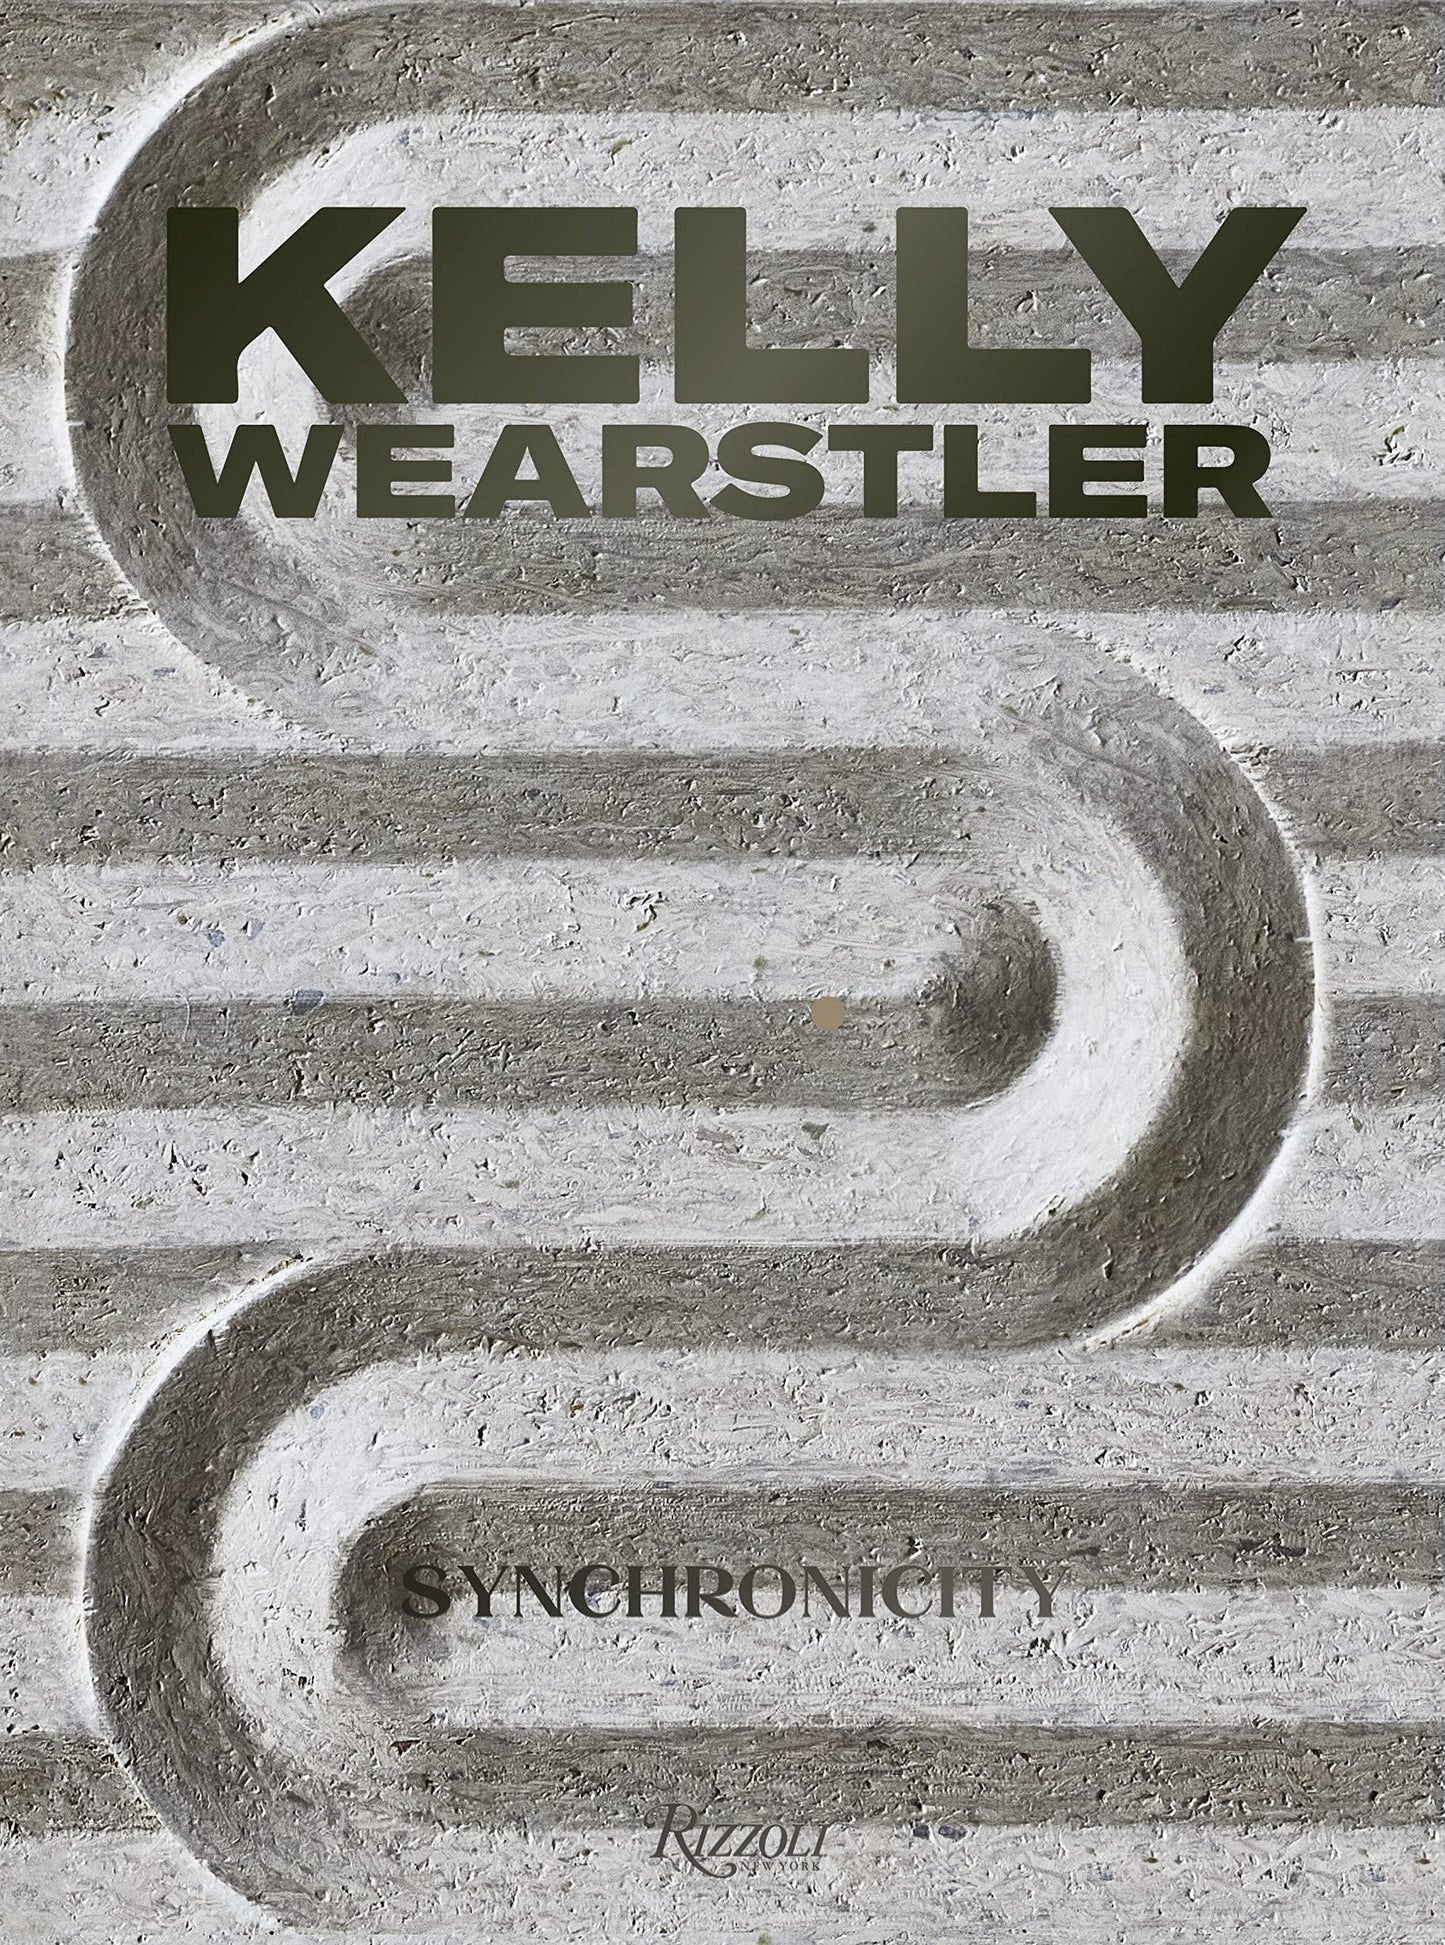 Kelly Wearstler - Synchronicity